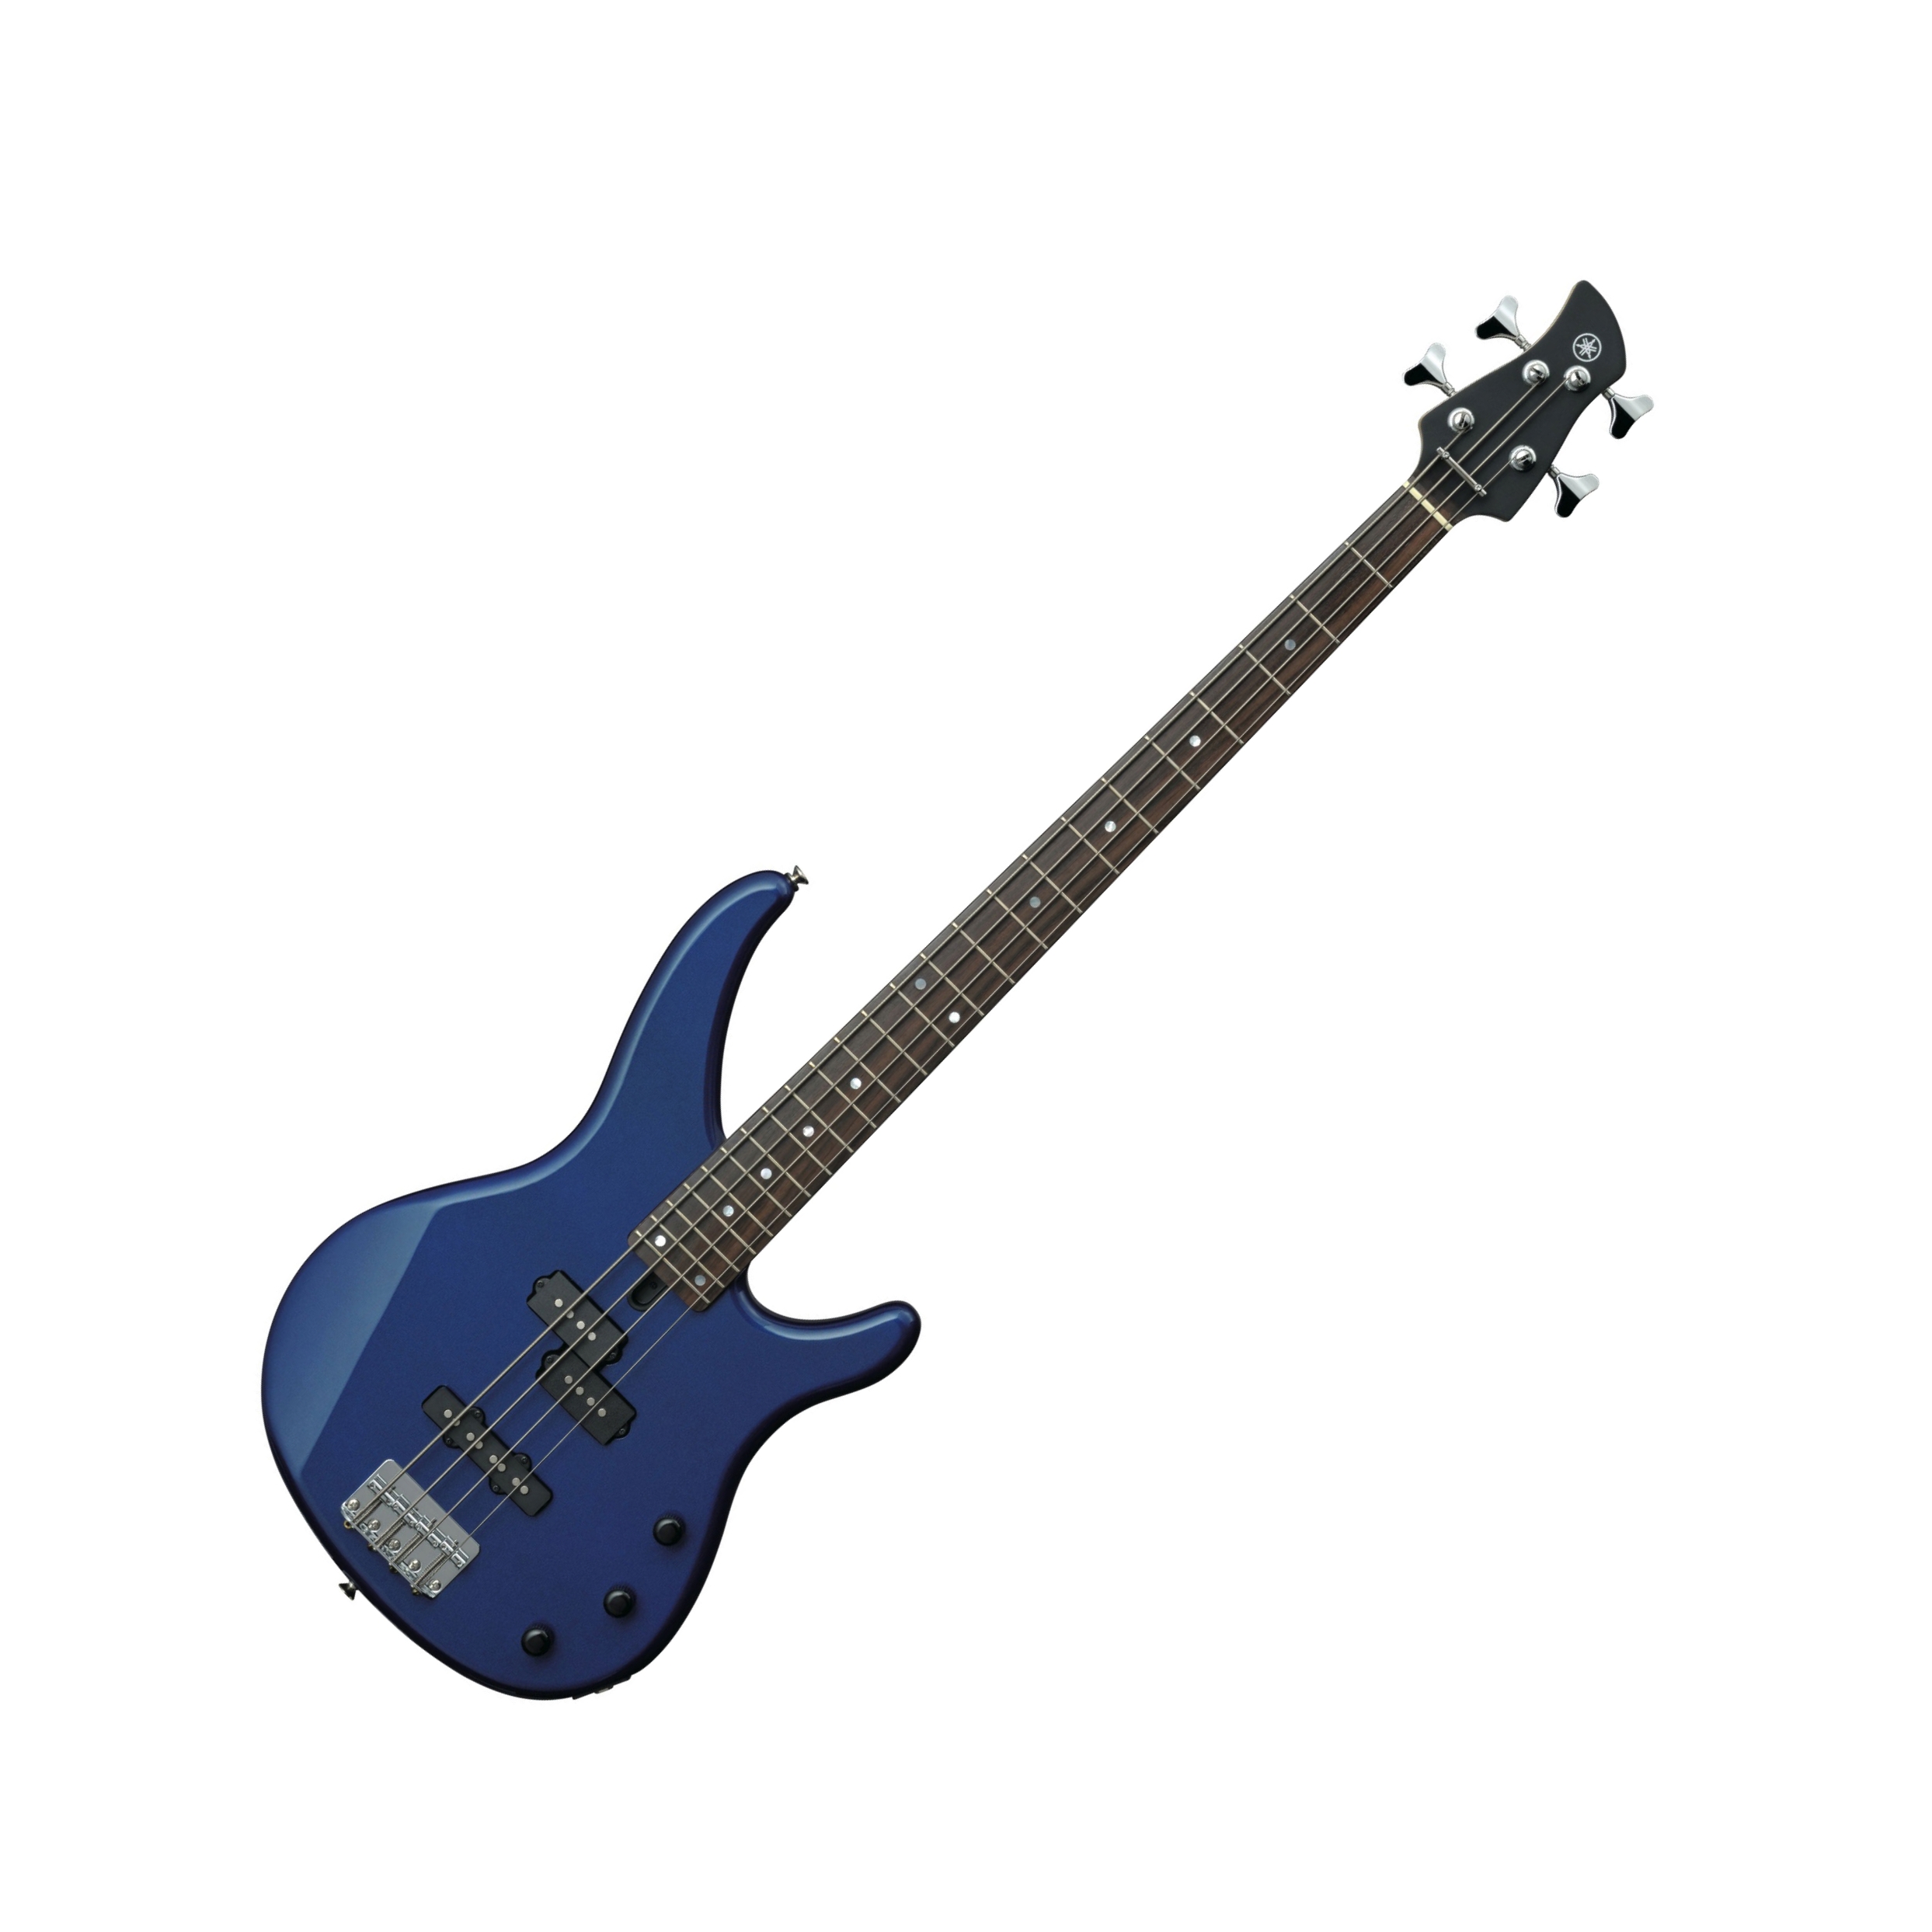 Yamaha TRBX-174 DBM - бас гитара,24 лада,темно-синий металлик